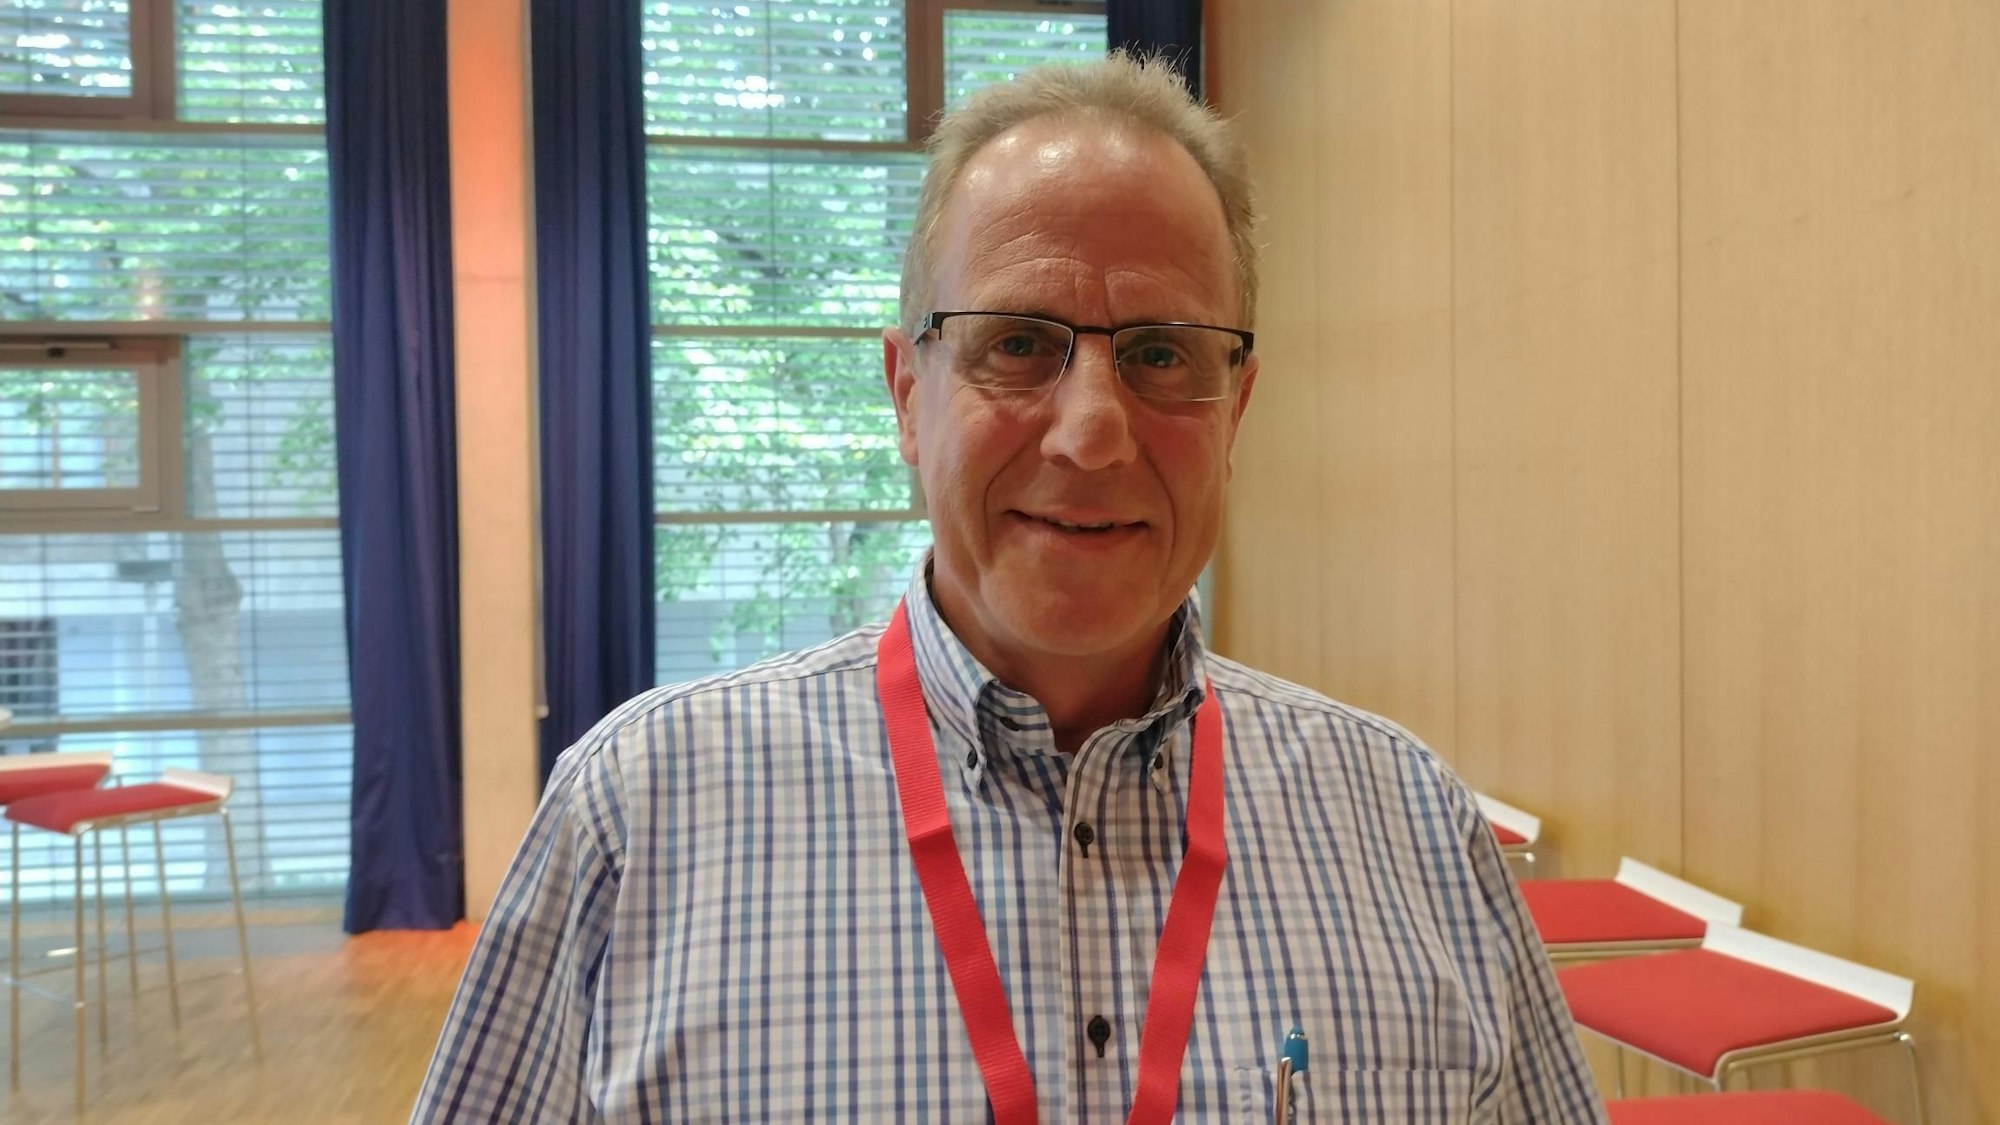 Michael Roth, SPD-Stadtrat in Eschweiler und Betriebsrats am RWE-Kraftwerk Weisweiler